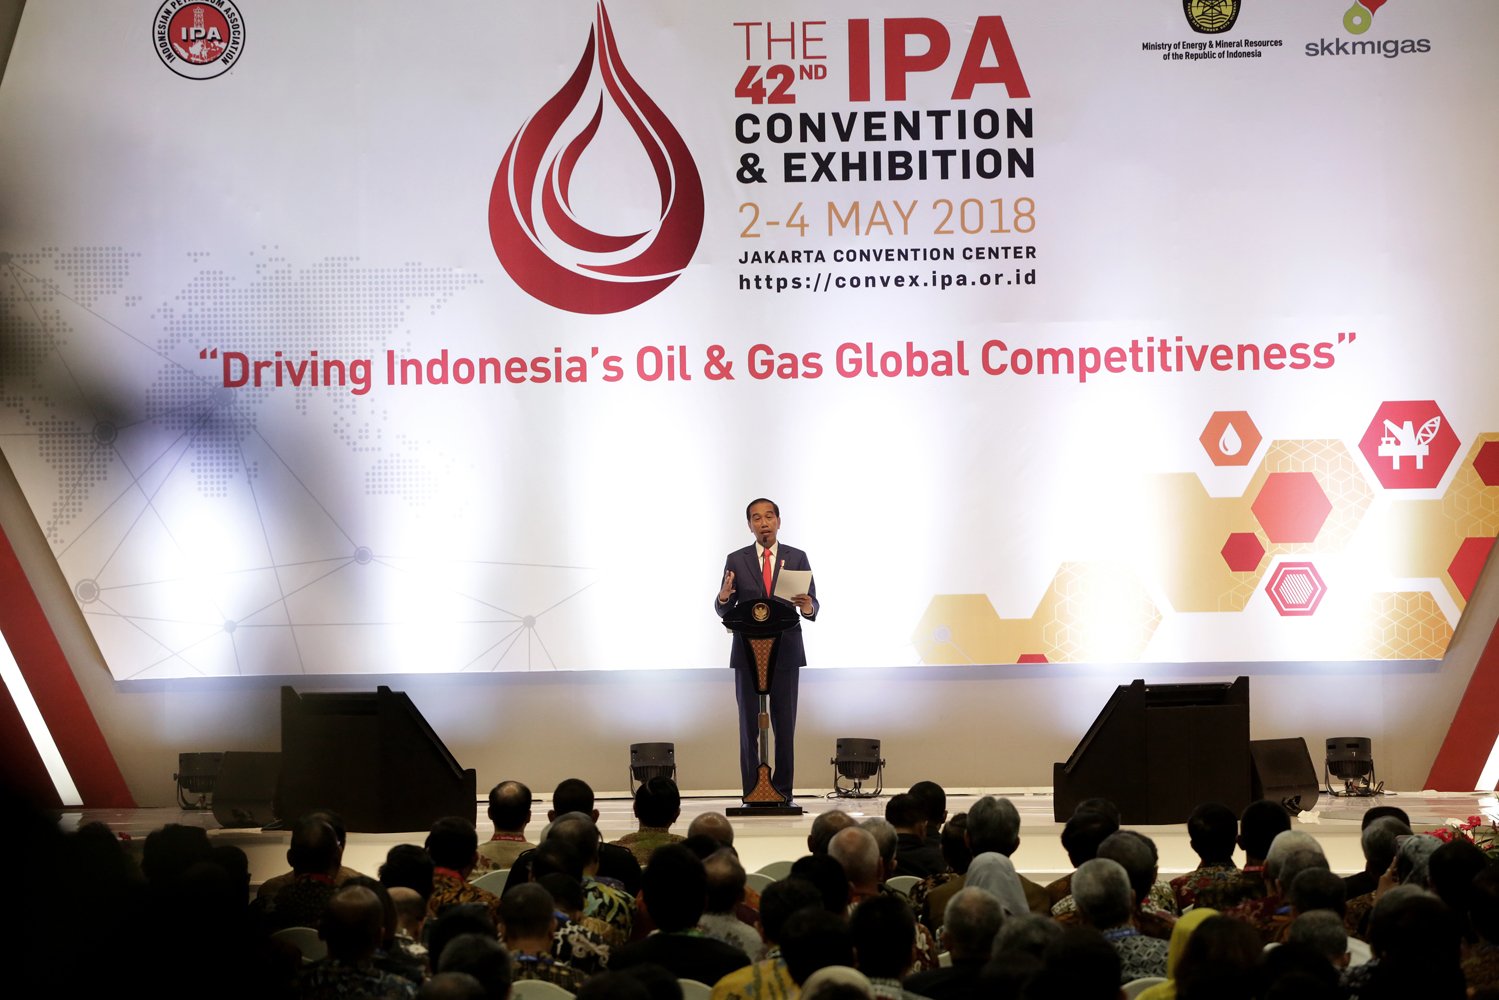 Perhelatan IPA Convex ke-42 kali ini istimewa karena dibuka oleh Presiden Joko Widodo. Tema IPA 2018 menggarisbawahi upaya meningkatkan kembali daya saing industri hulu migas Indonesia di level global yang harus dikerjakan oleh para pemangku kepentingan di sektor ini.